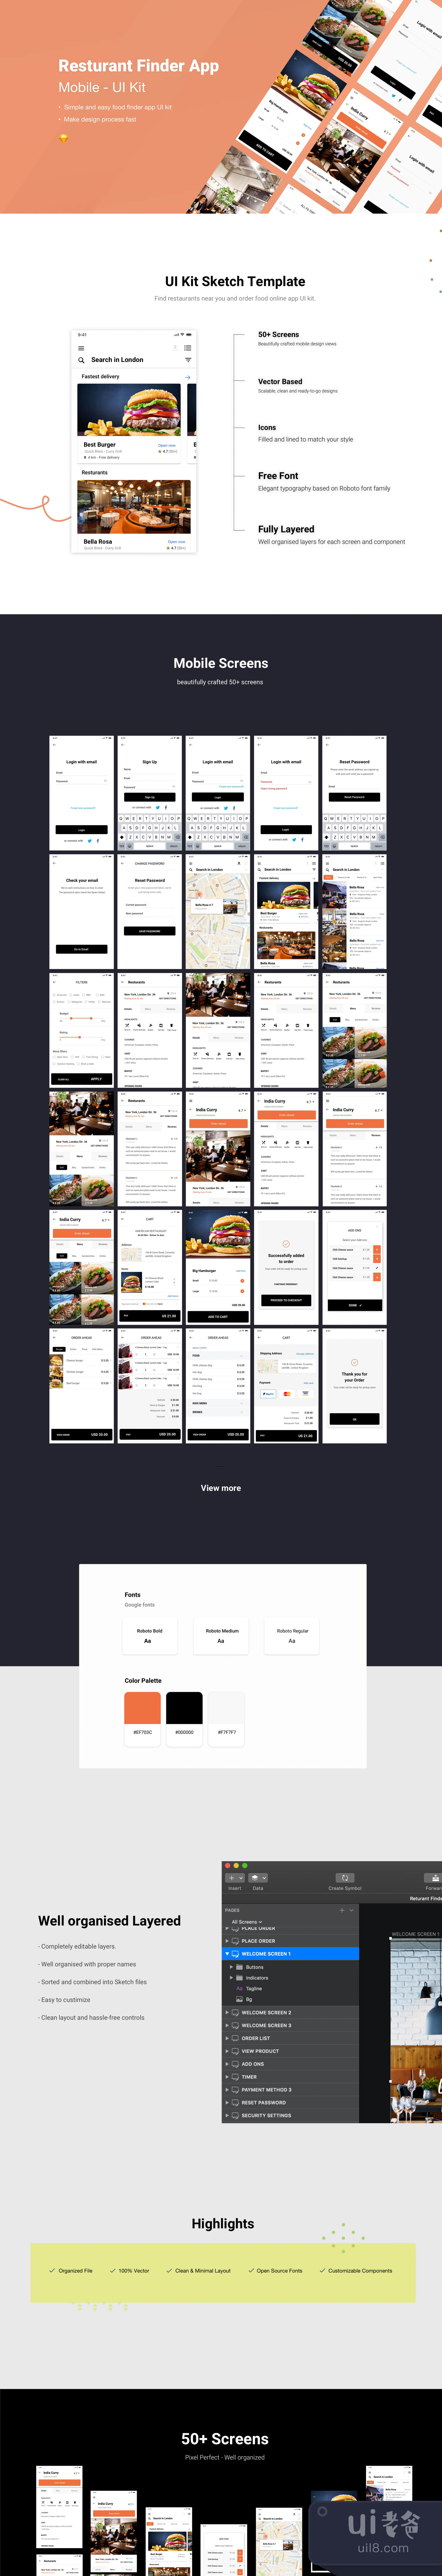 餐馆搜索应用 (Restaurant Finder App)插图